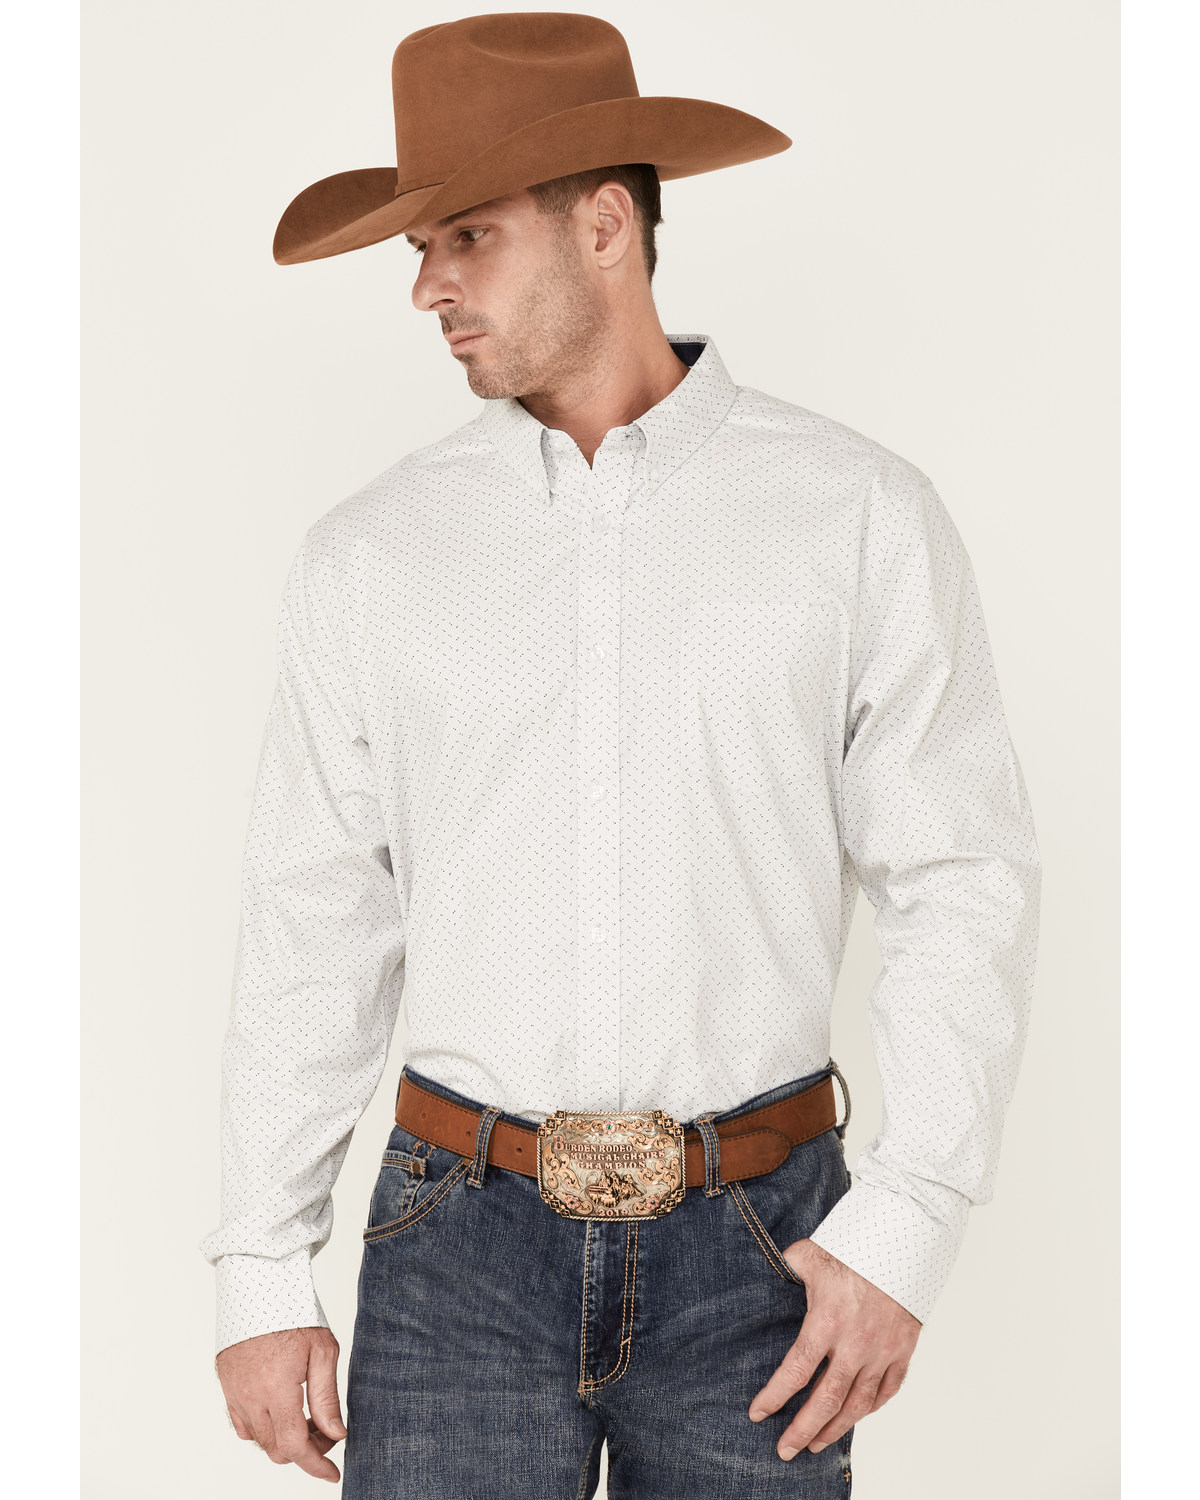 Cody James Core Men's Circuit Board Geo Print Long Sleeve Button-Down Western Shirt